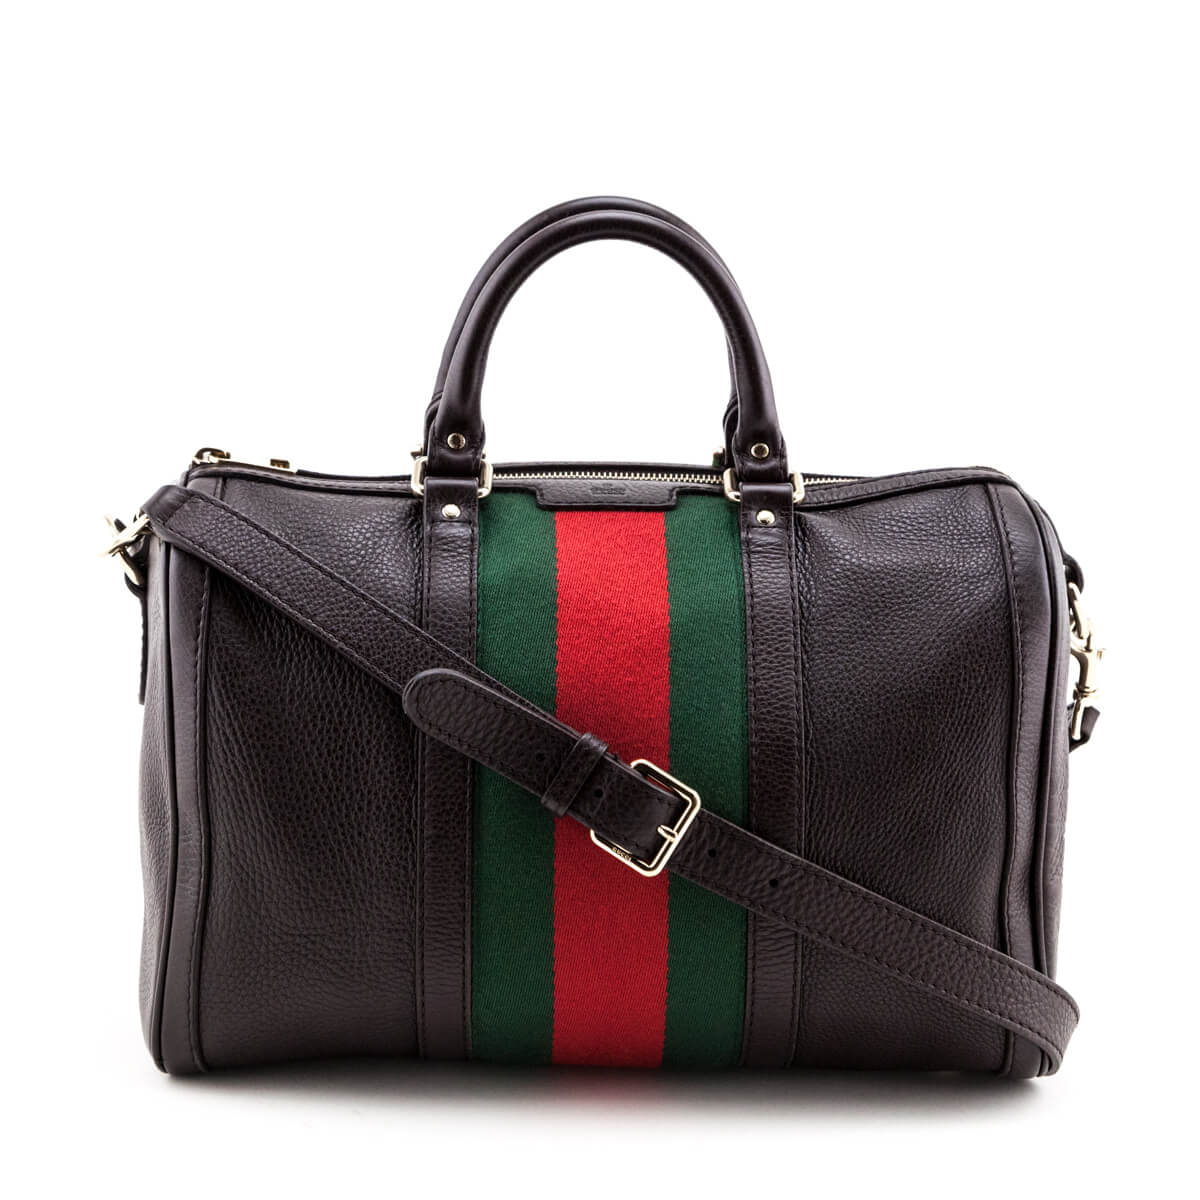 Pre-Loved Gucci Boston Handbag 001-255-00016